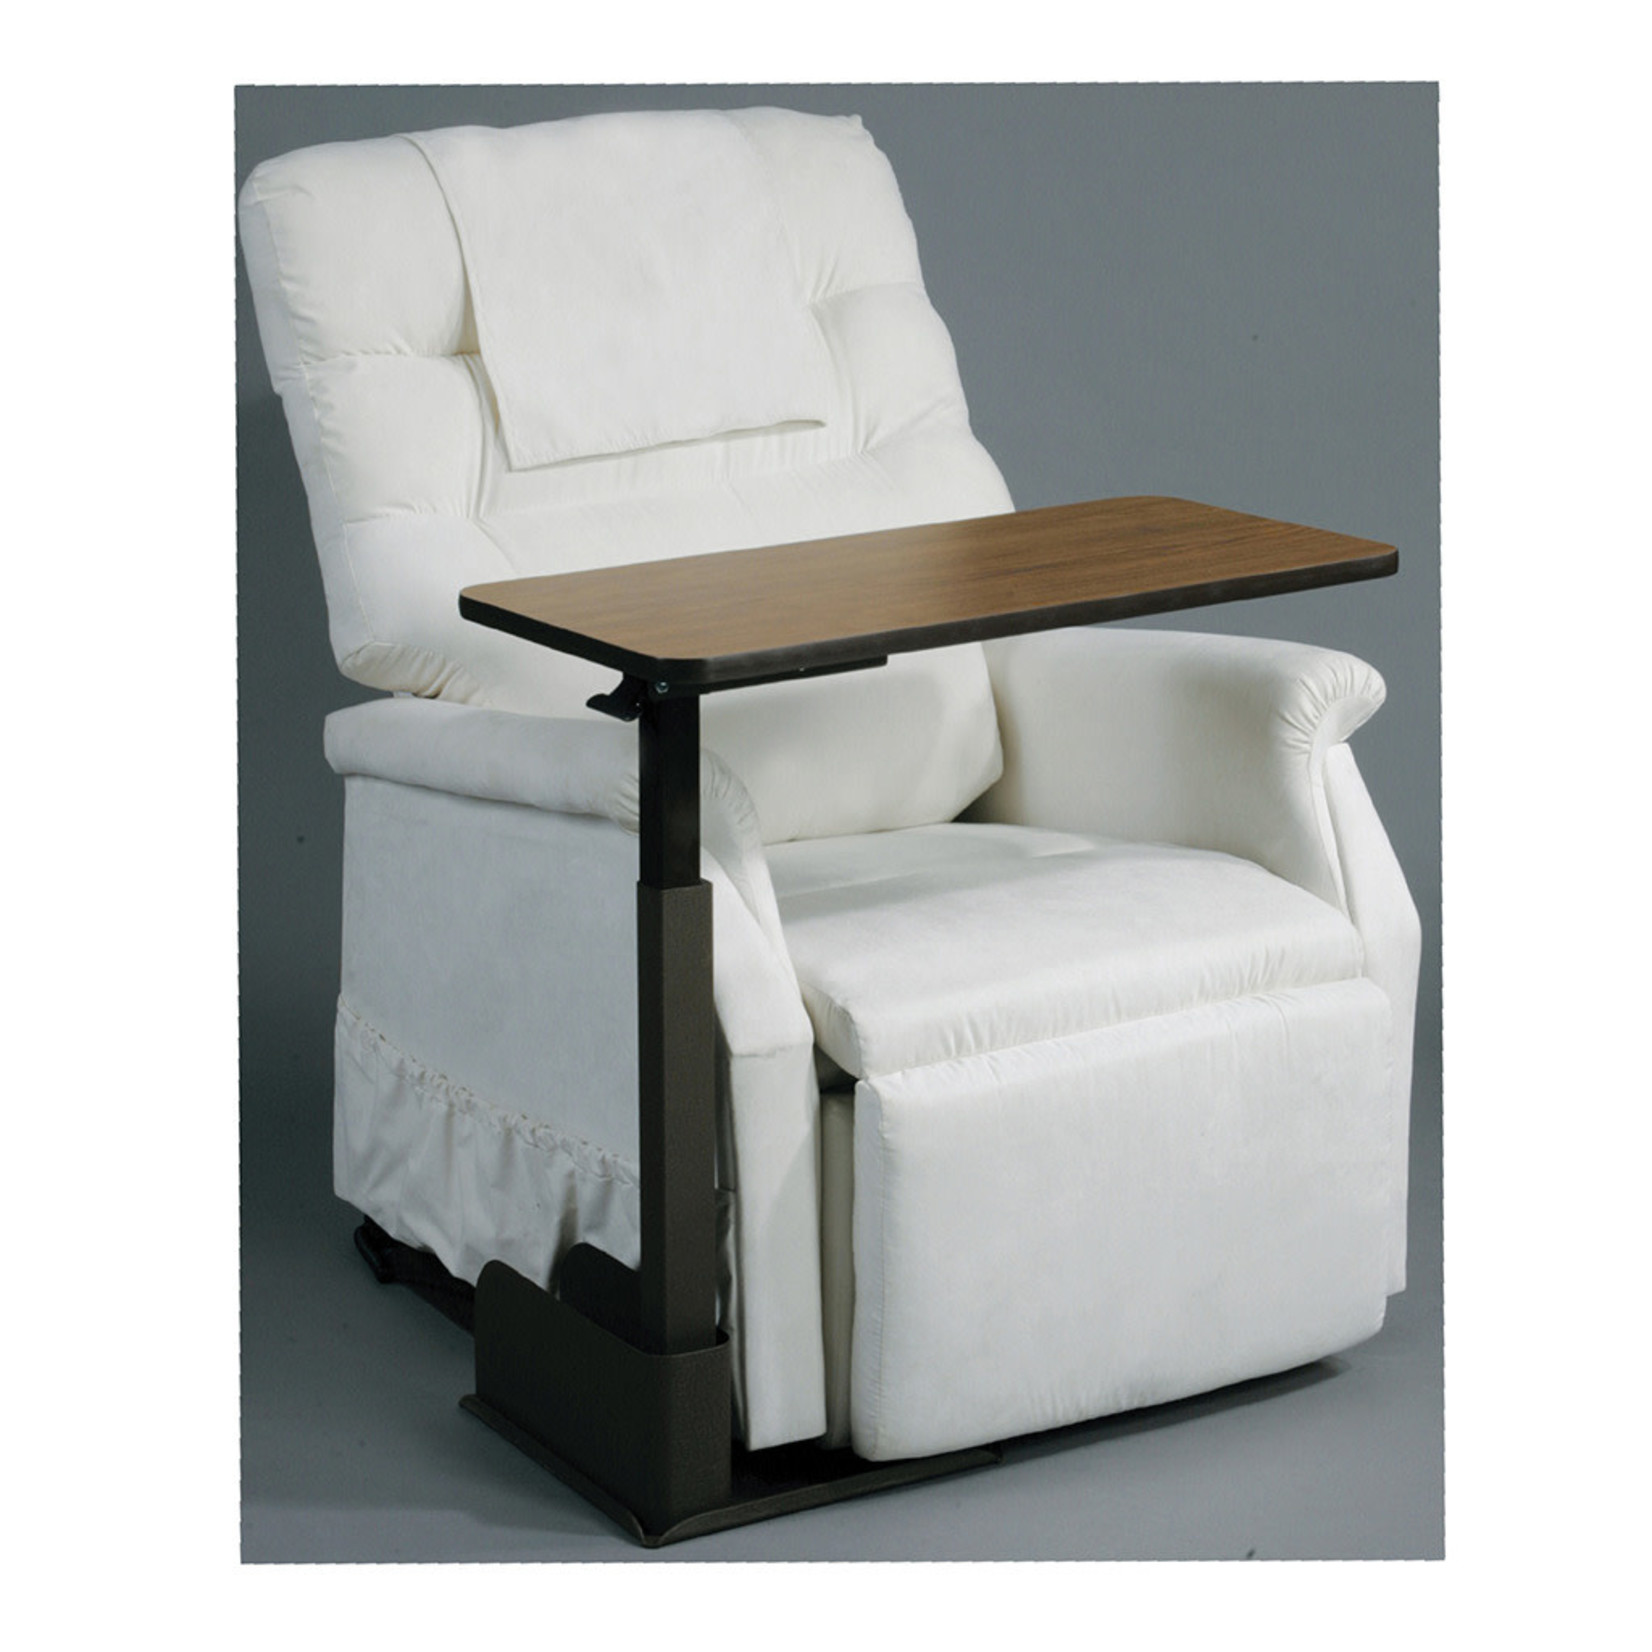 https://cdn.shoplightspeed.com/shops/648439/files/37732962/1652x1652x2/drive-seat-lift-chair-table.jpg